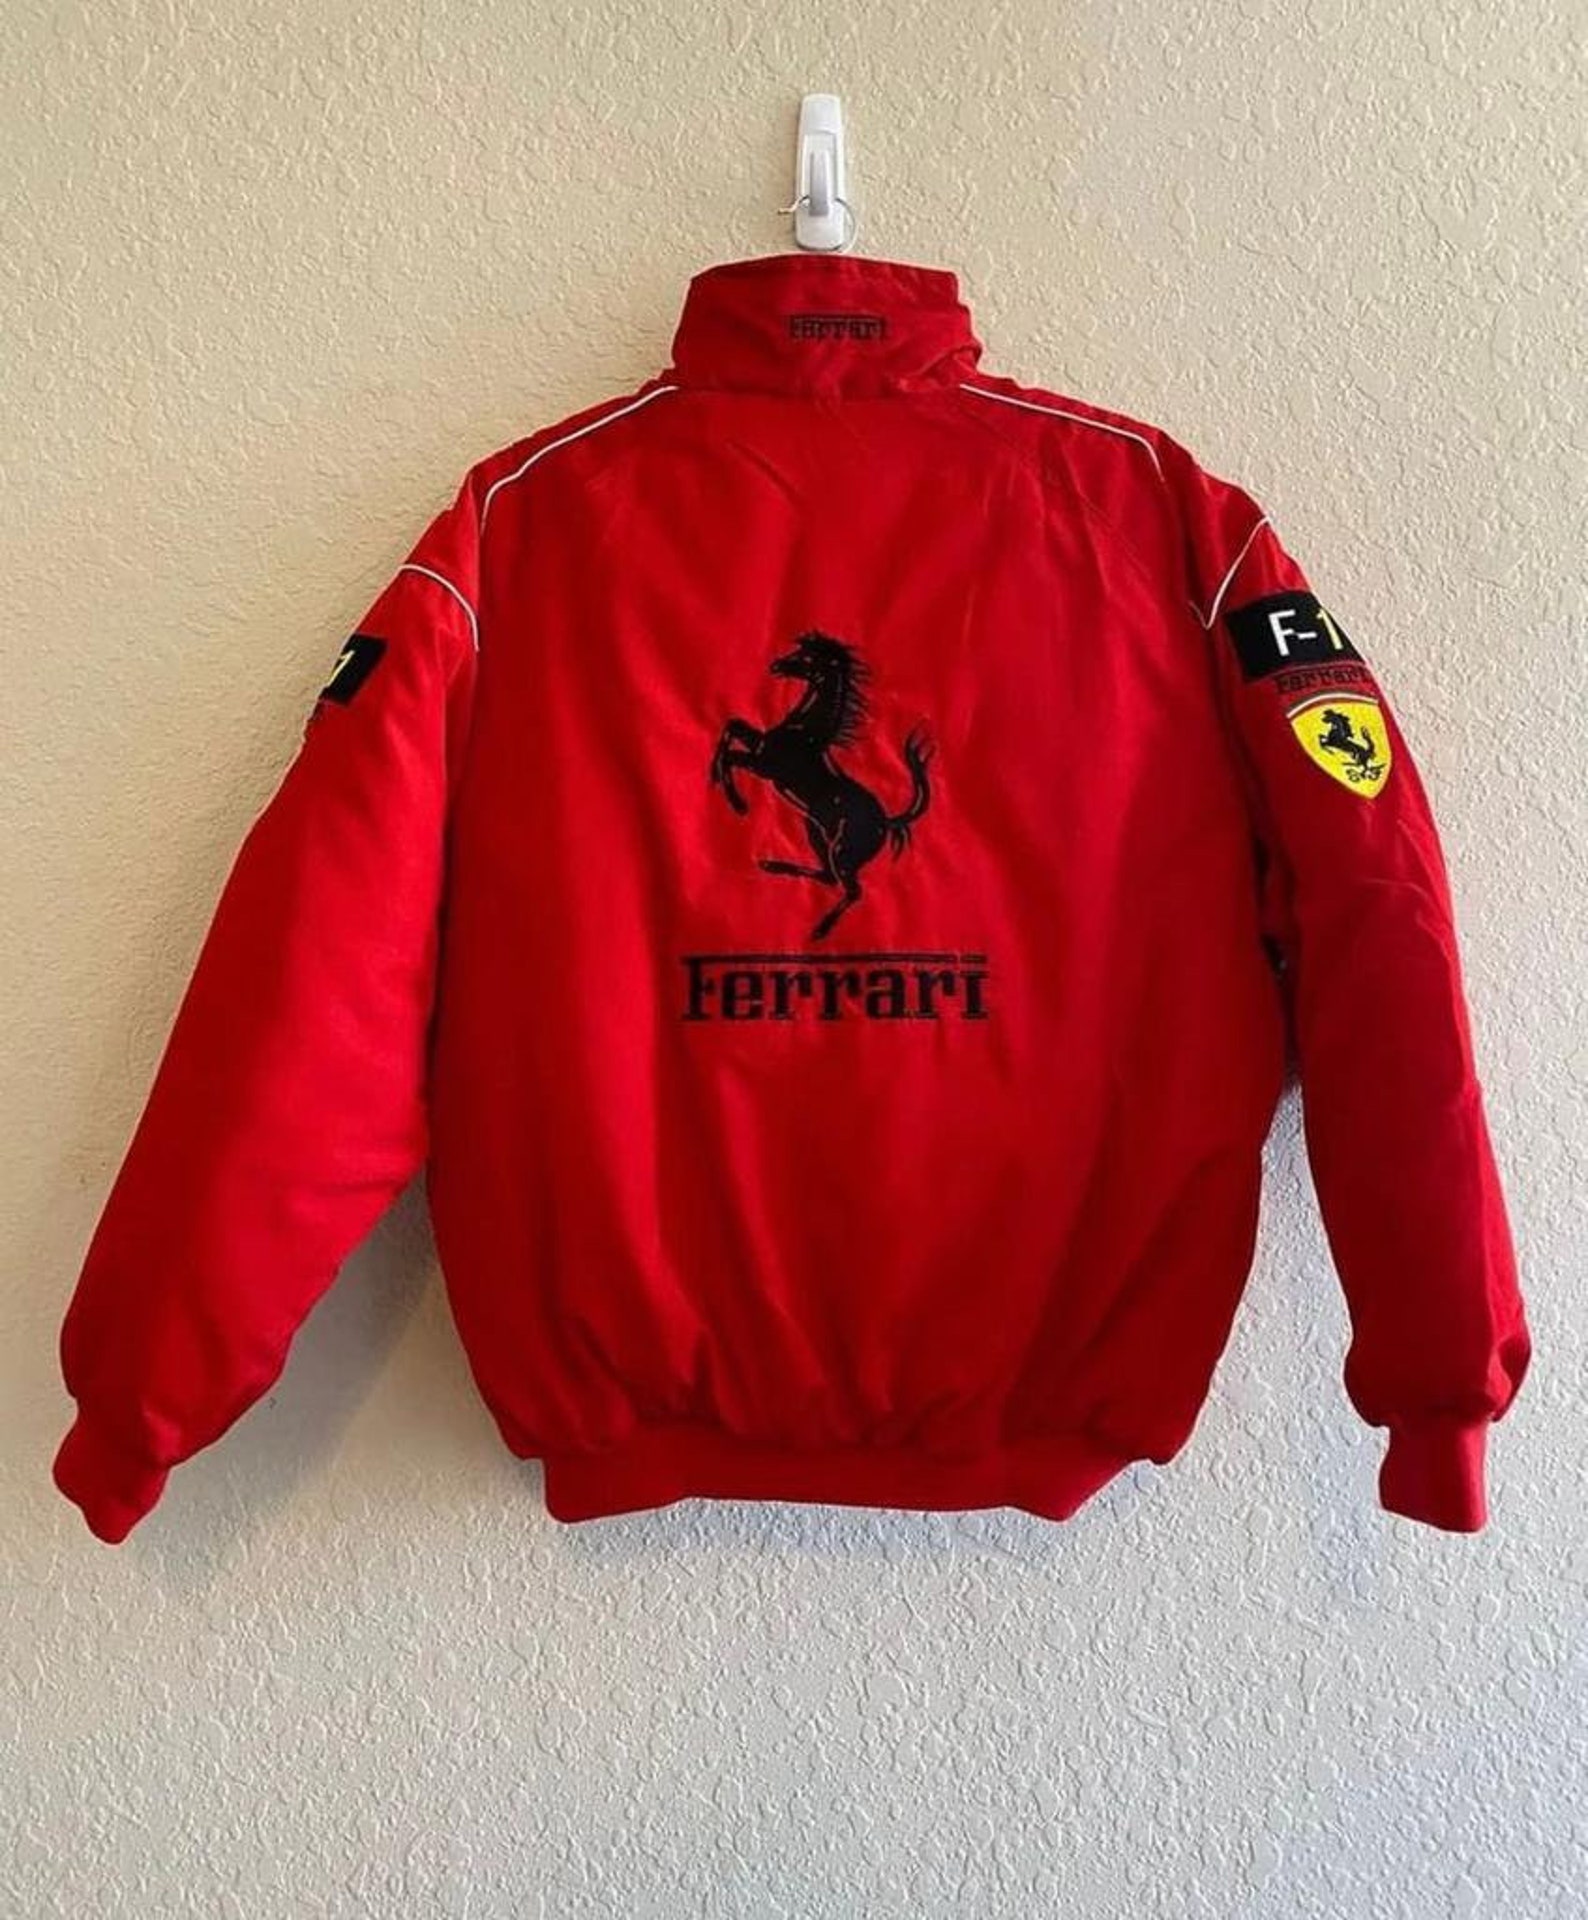 Rare Vintage Style Red and Black Ferrari Racing/bomber Jacket, Vintage ...